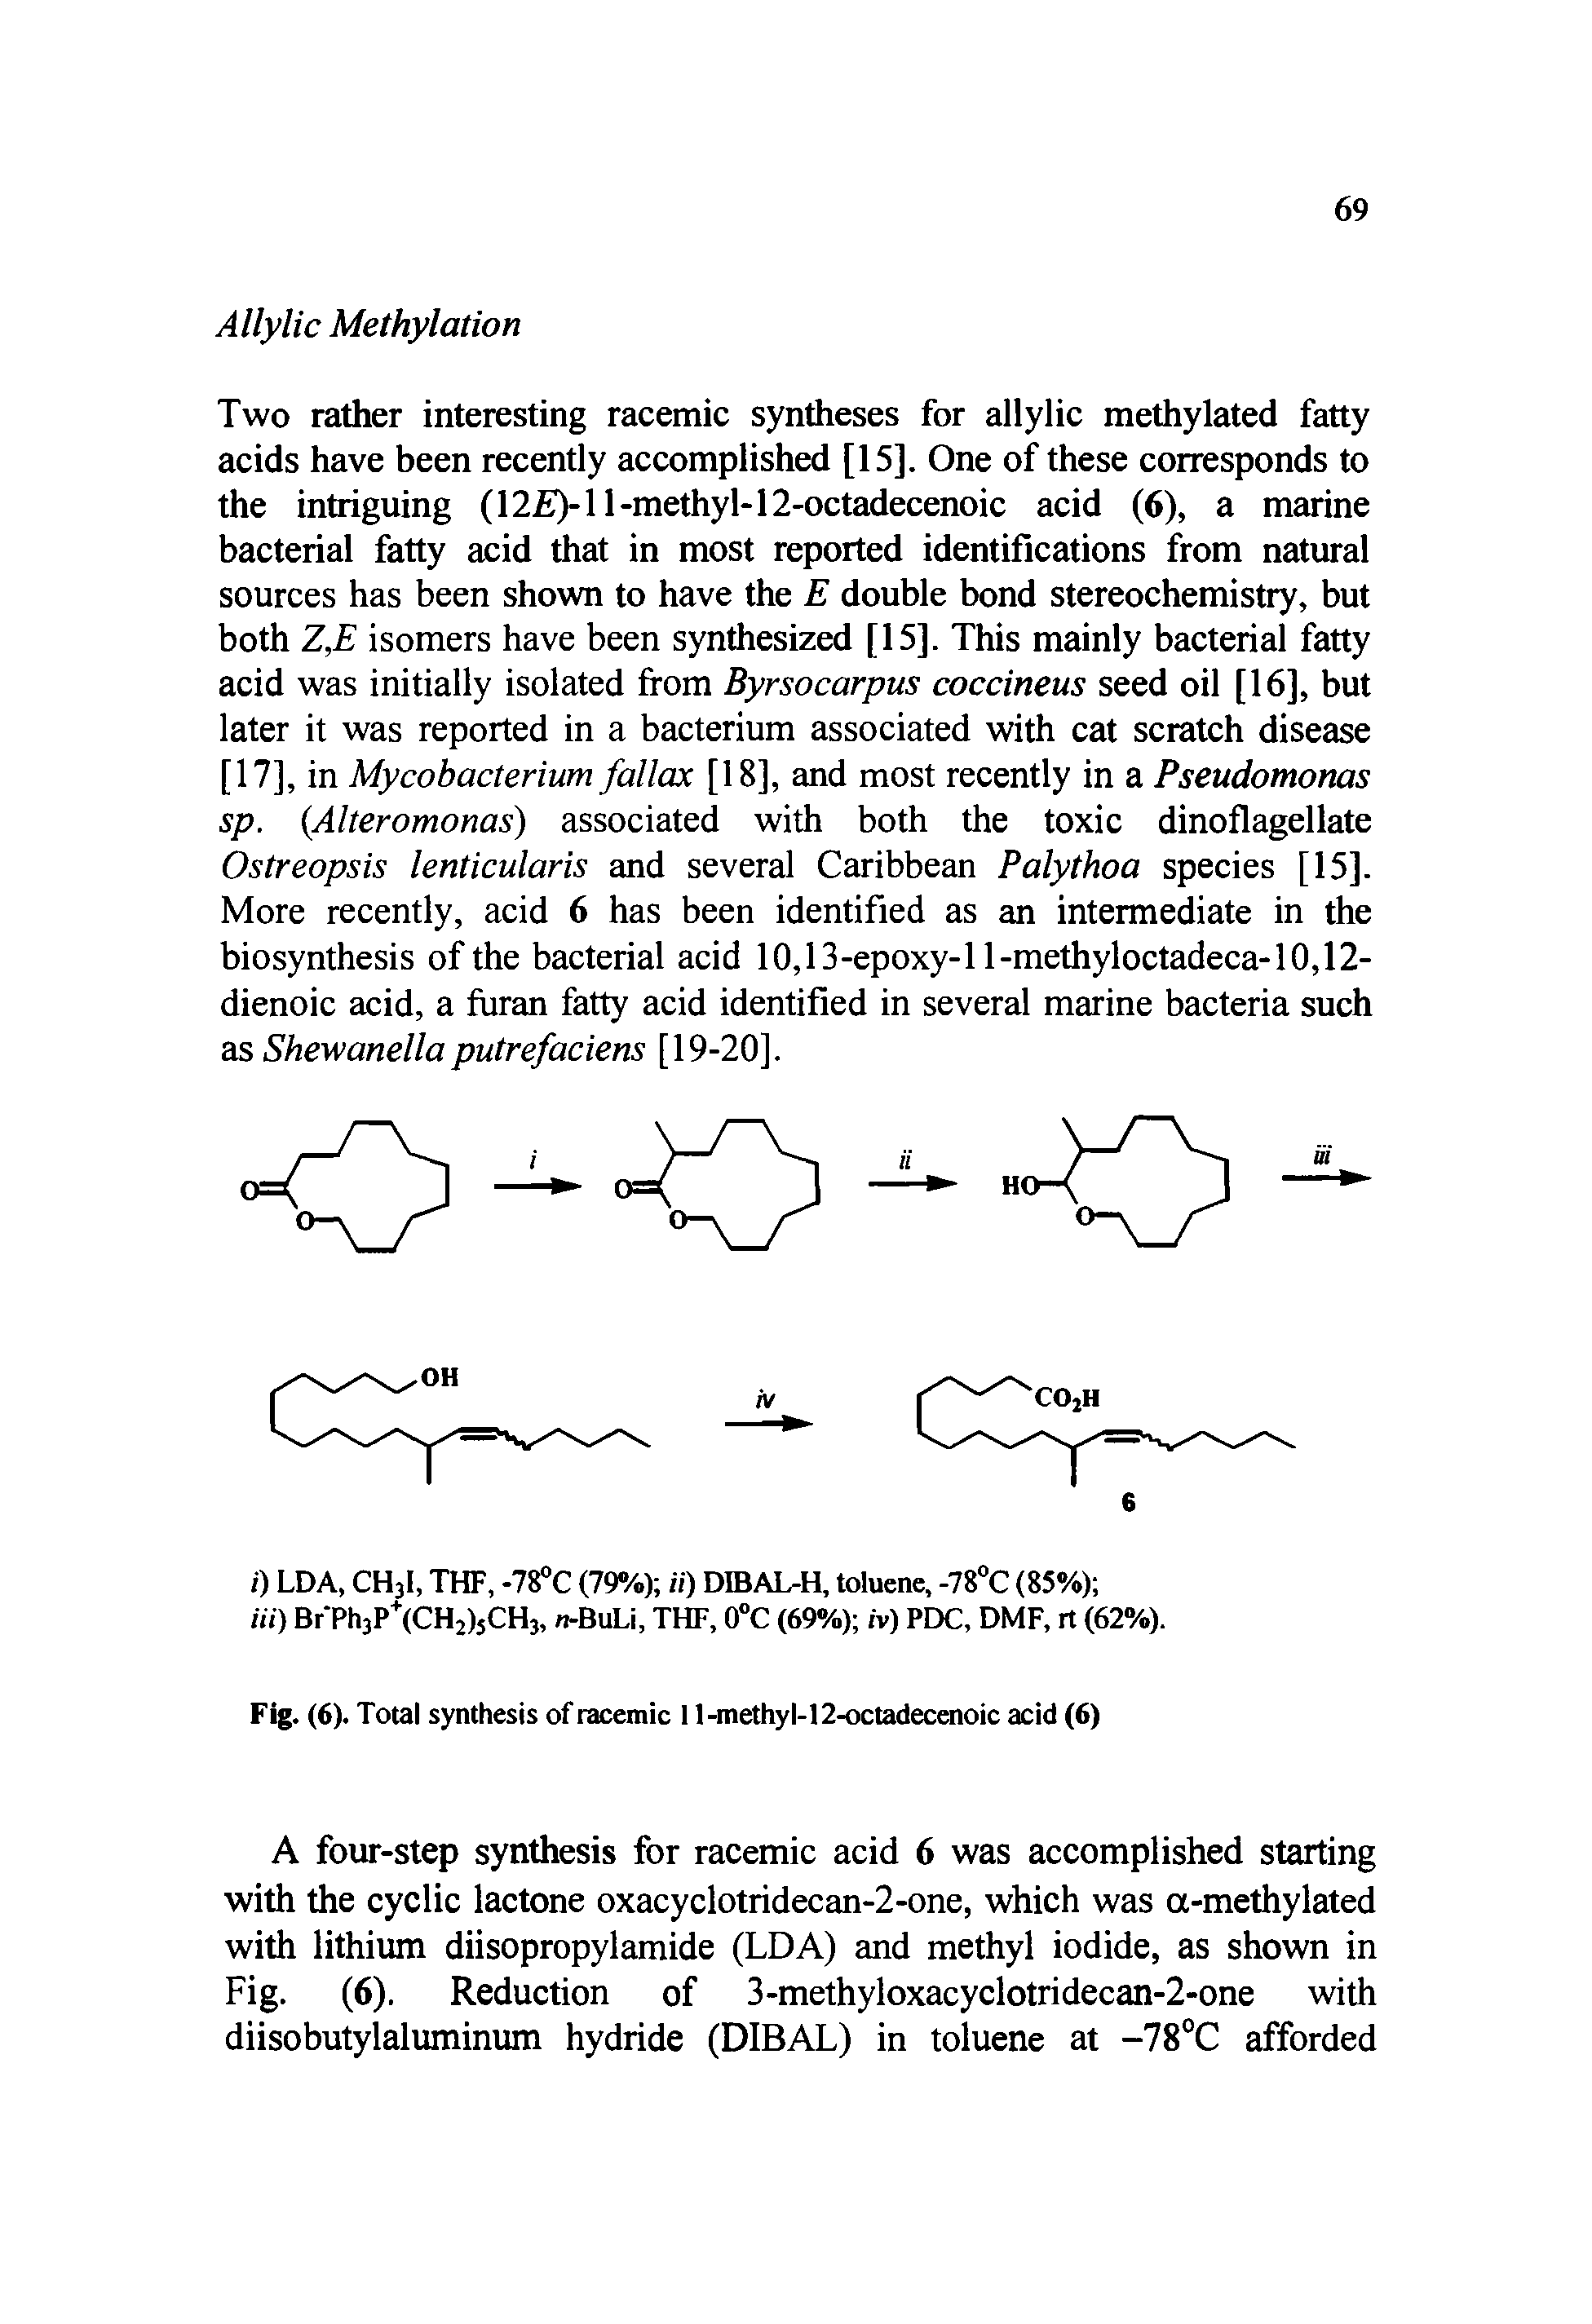 Fig. (6). Total synthesis of racemic 11-methyl-12-octadecenoic acid (6)...